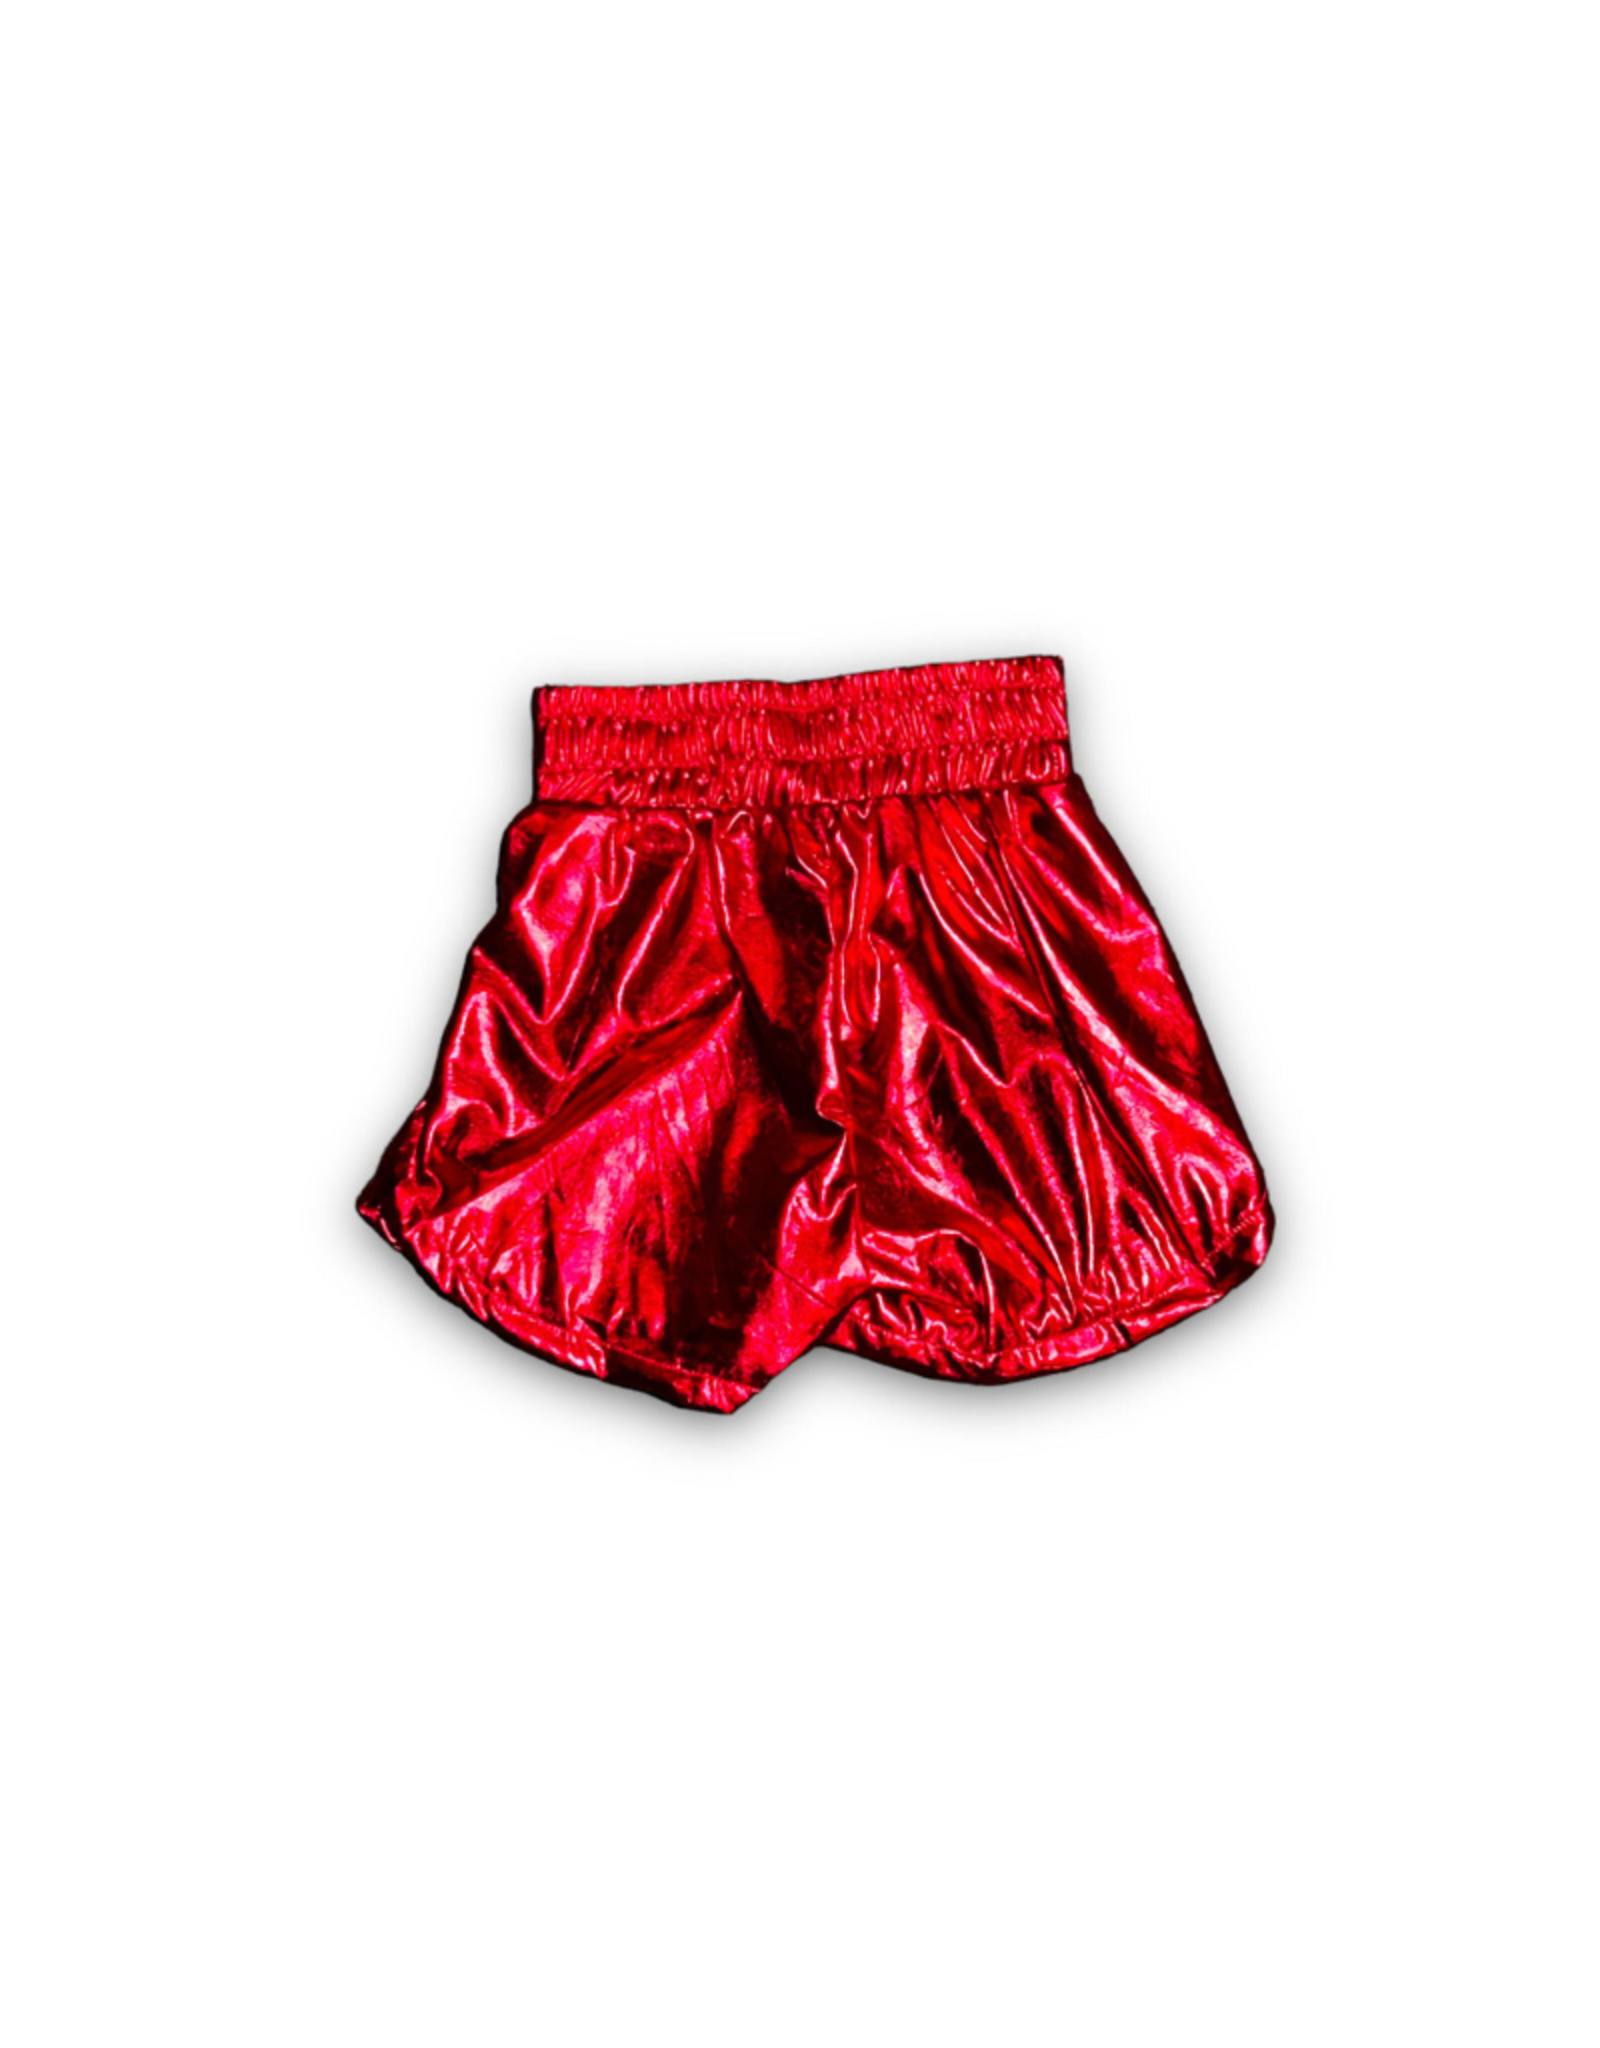 Belle Cher Red Metallic Shorts